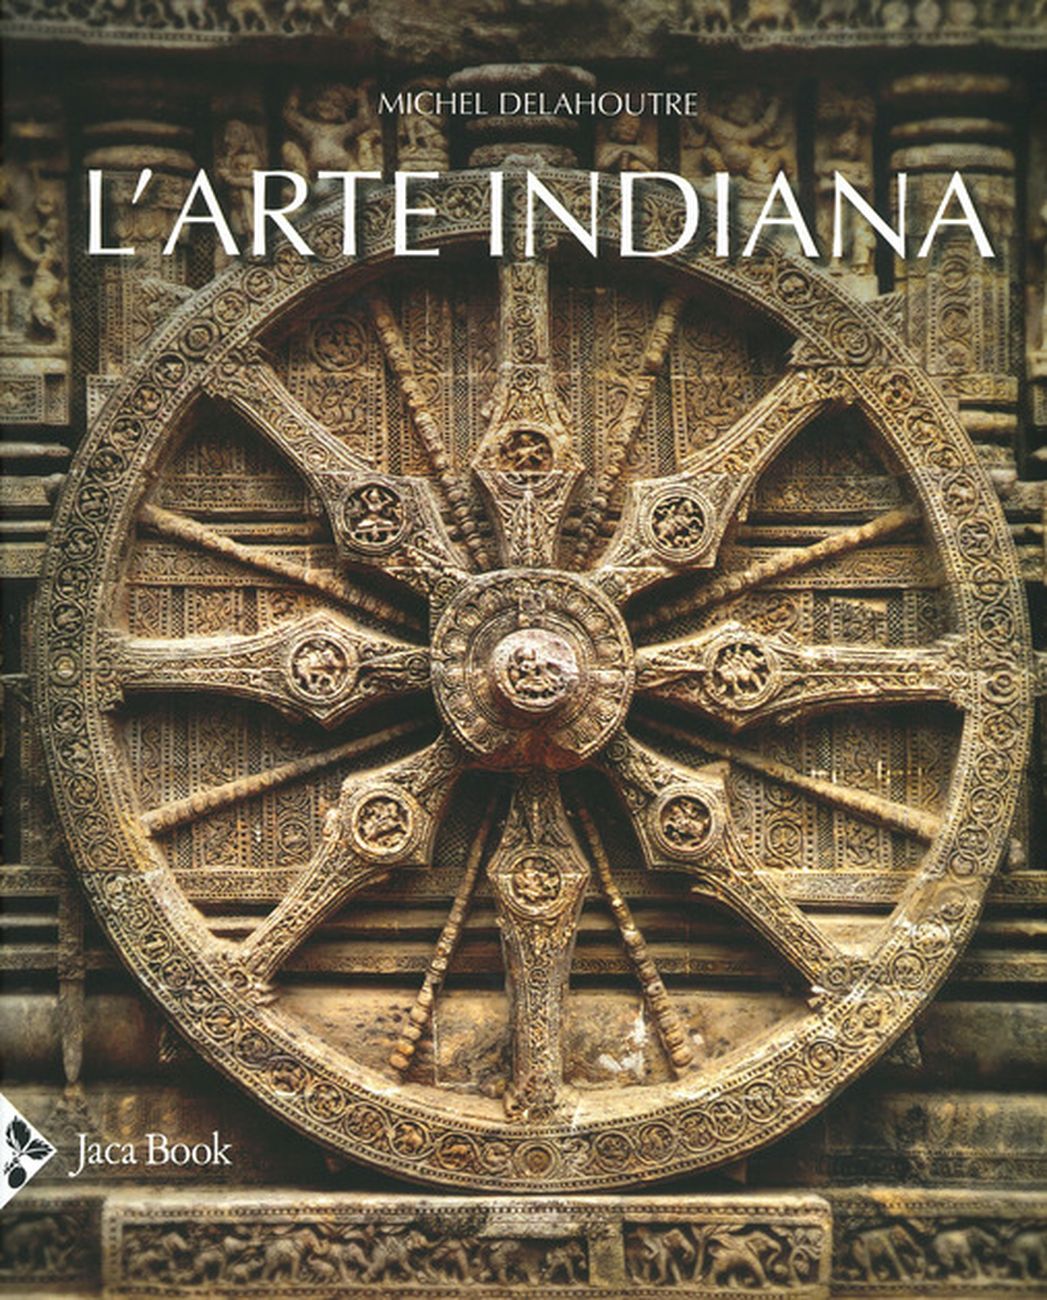 Michel Delahoutre – L'arte indiana (Jaca Book, Milano 2020)